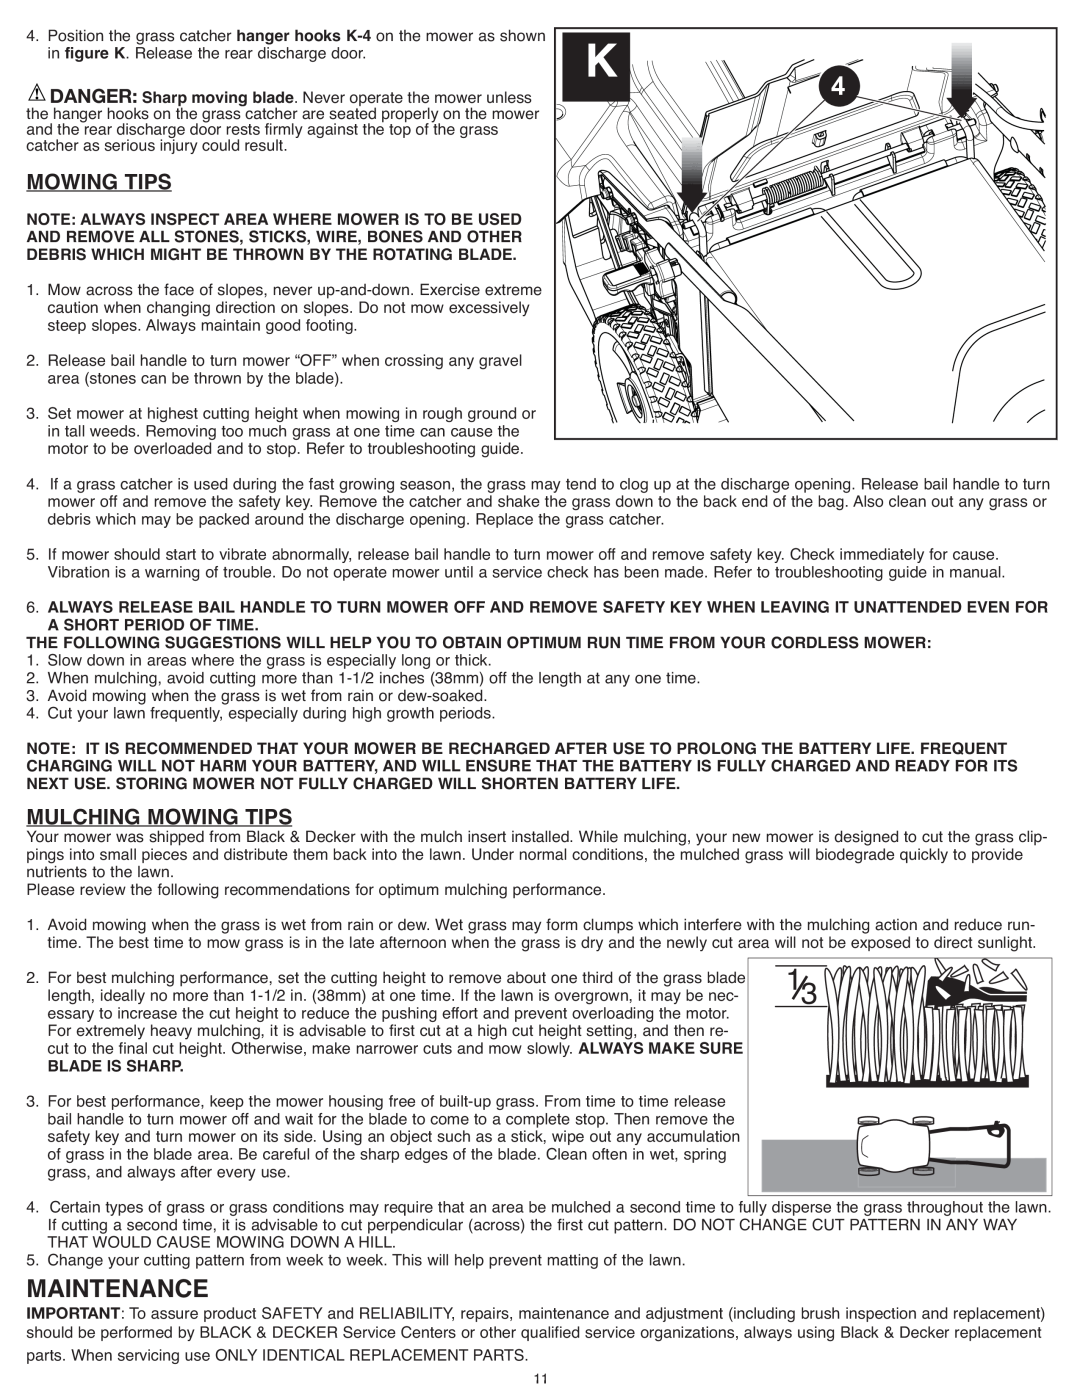 Black & Decker CM1836R, CM 1836 instruction manual Maintenance, Mulching Mowing Tips 